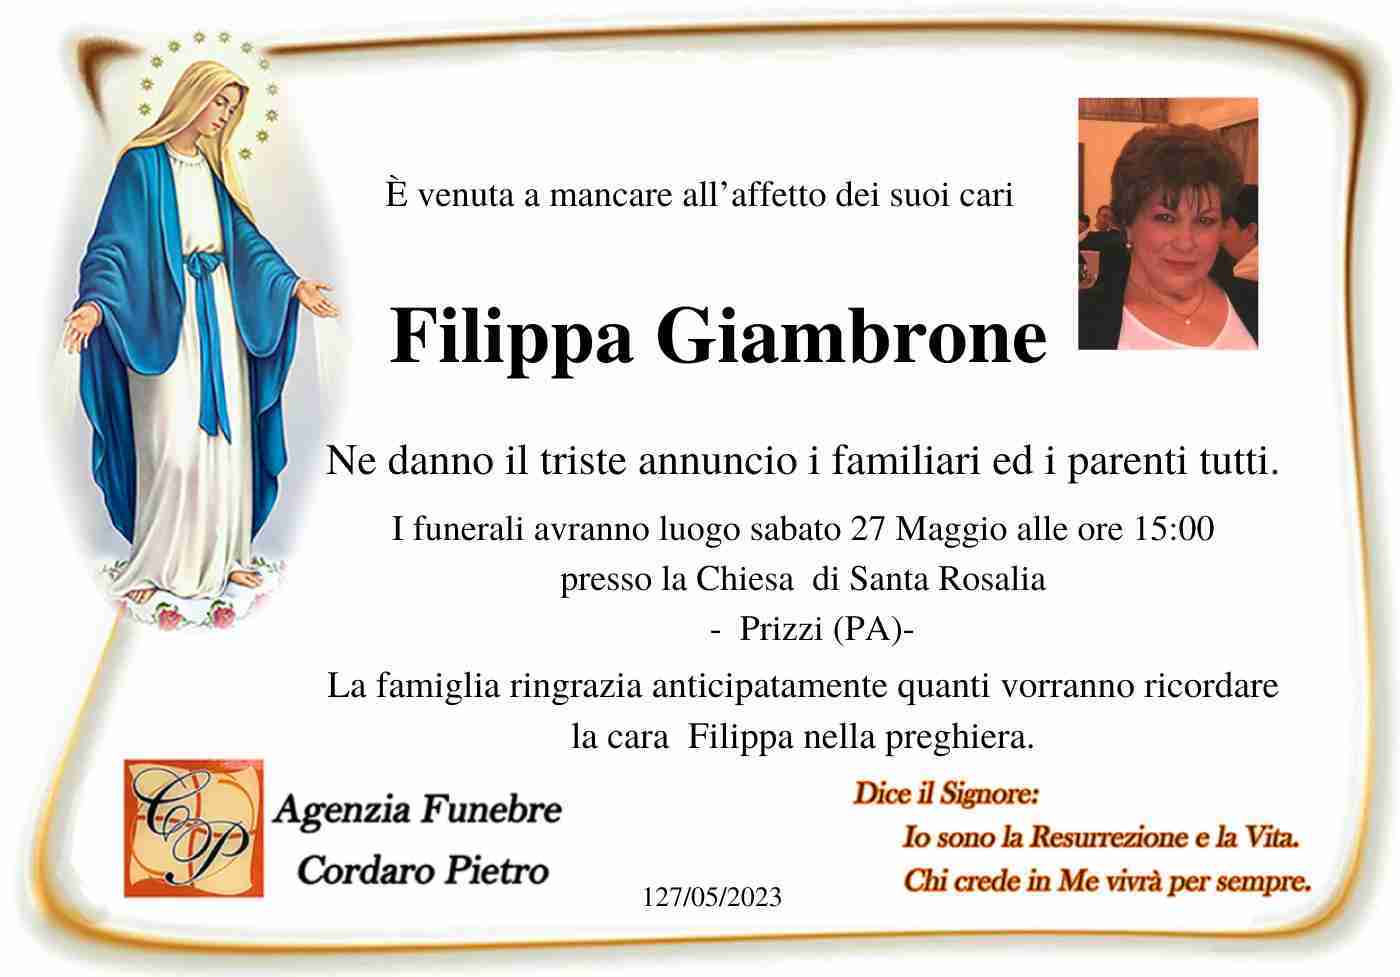 Filippa Giambrone